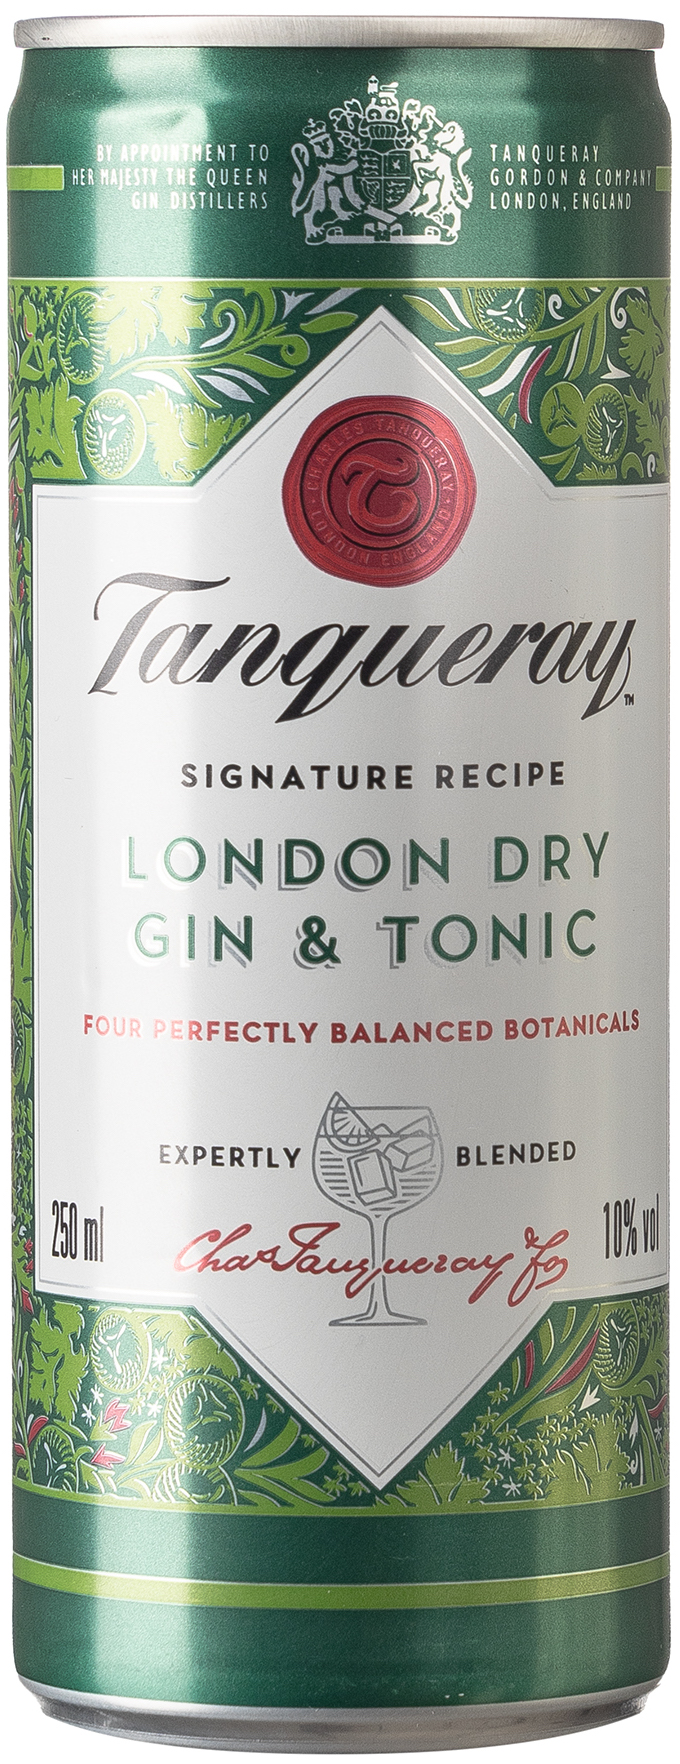 Tanqueray London Dry Gin and Tonic 10% vol. 0,33L EINWEG